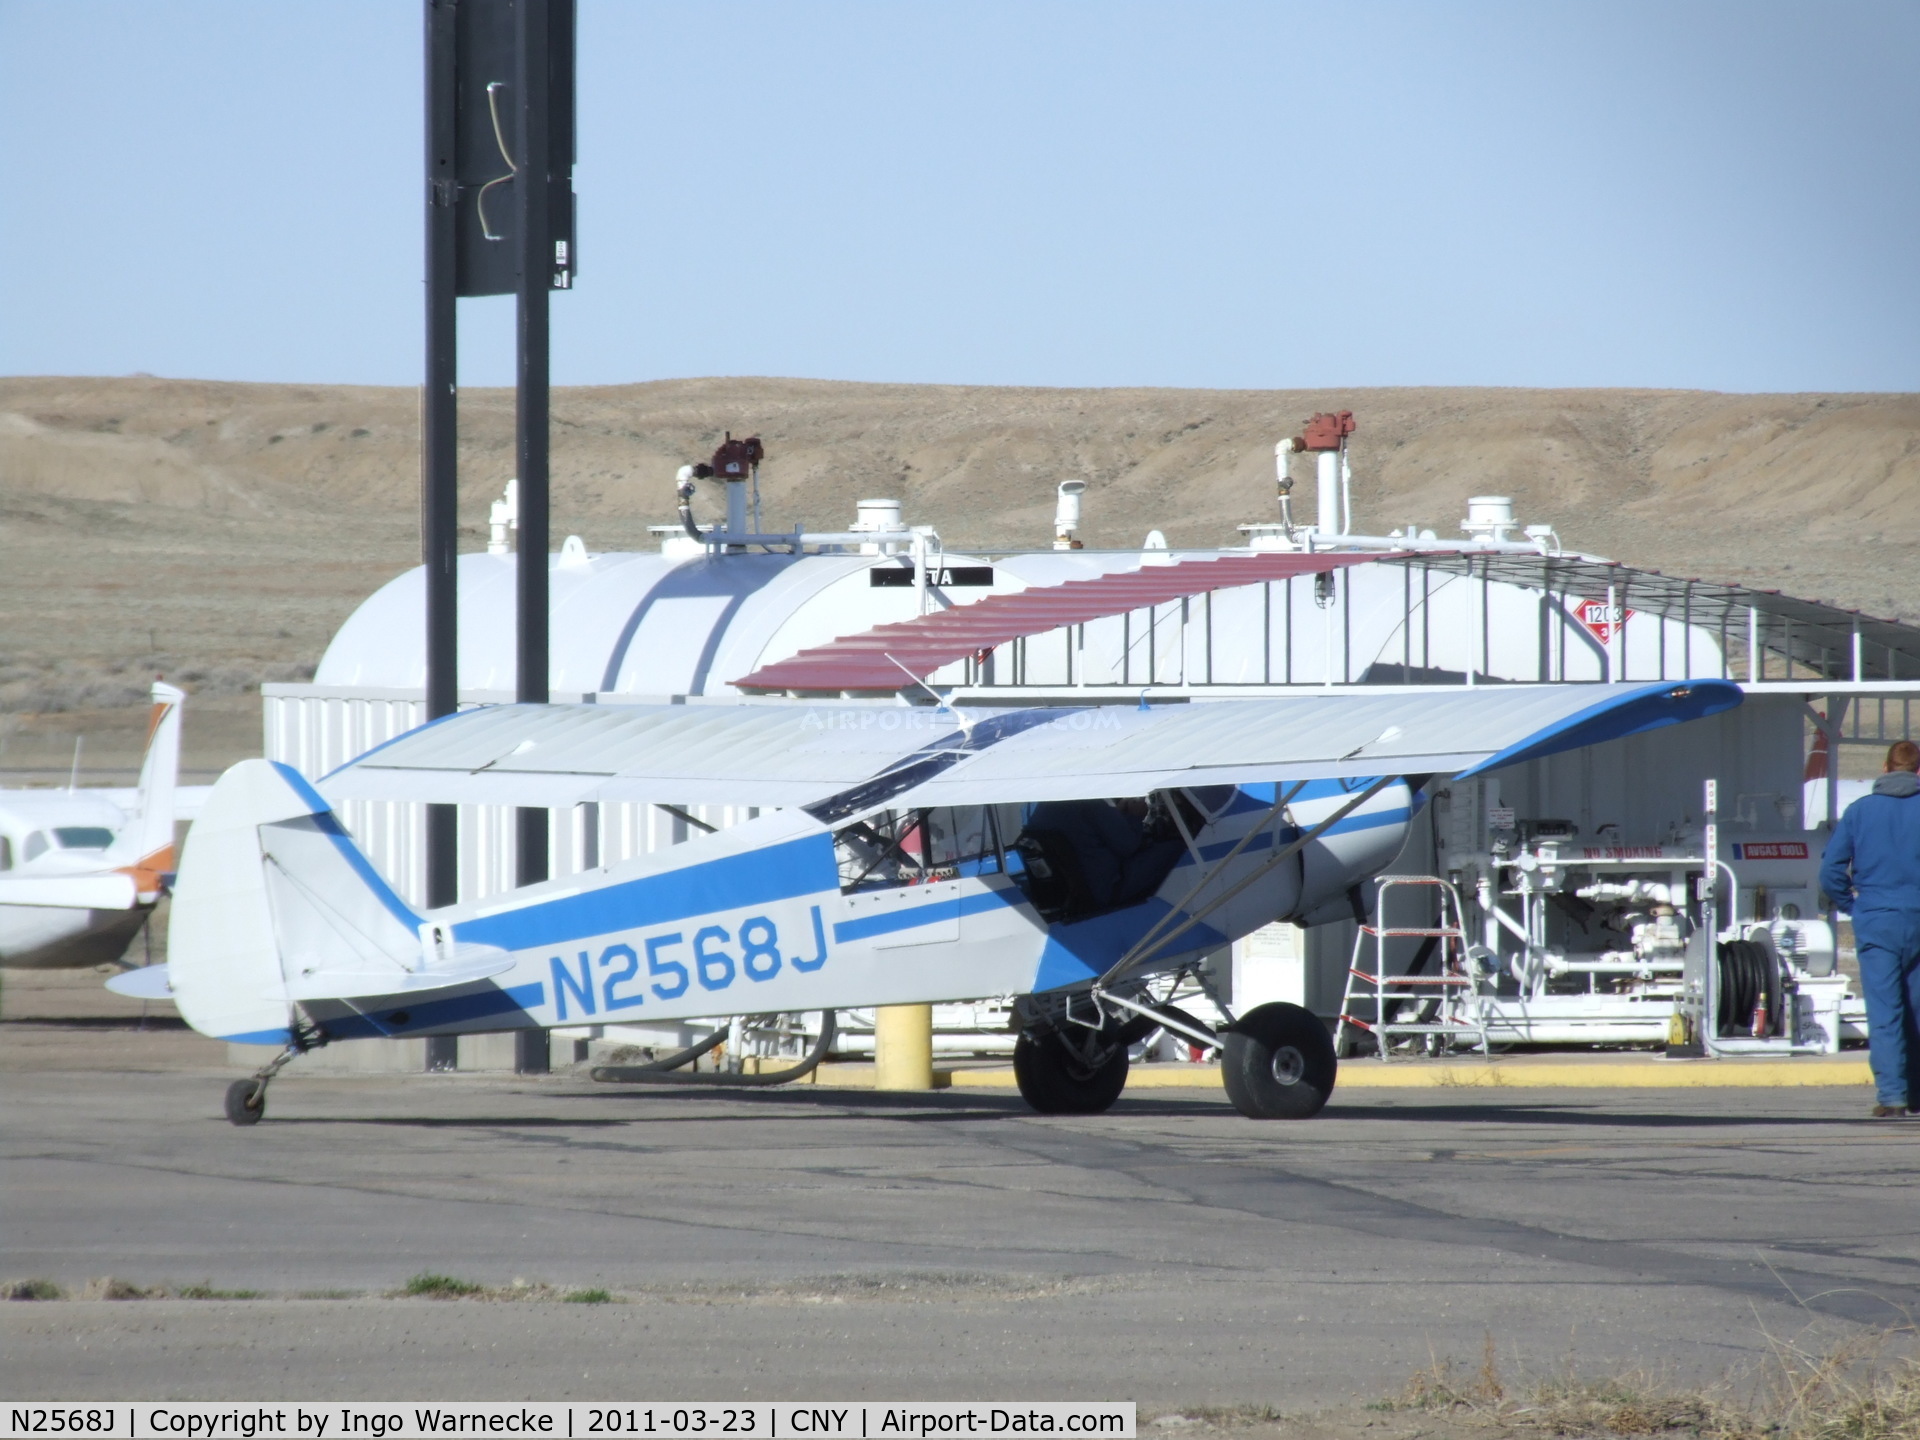 N2568J, 1979 Piper PA-18-150 Super Cub C/N 18-7909131, Piper PA-18-150 Super Cub at Canyonlands Field airport, Moab UT